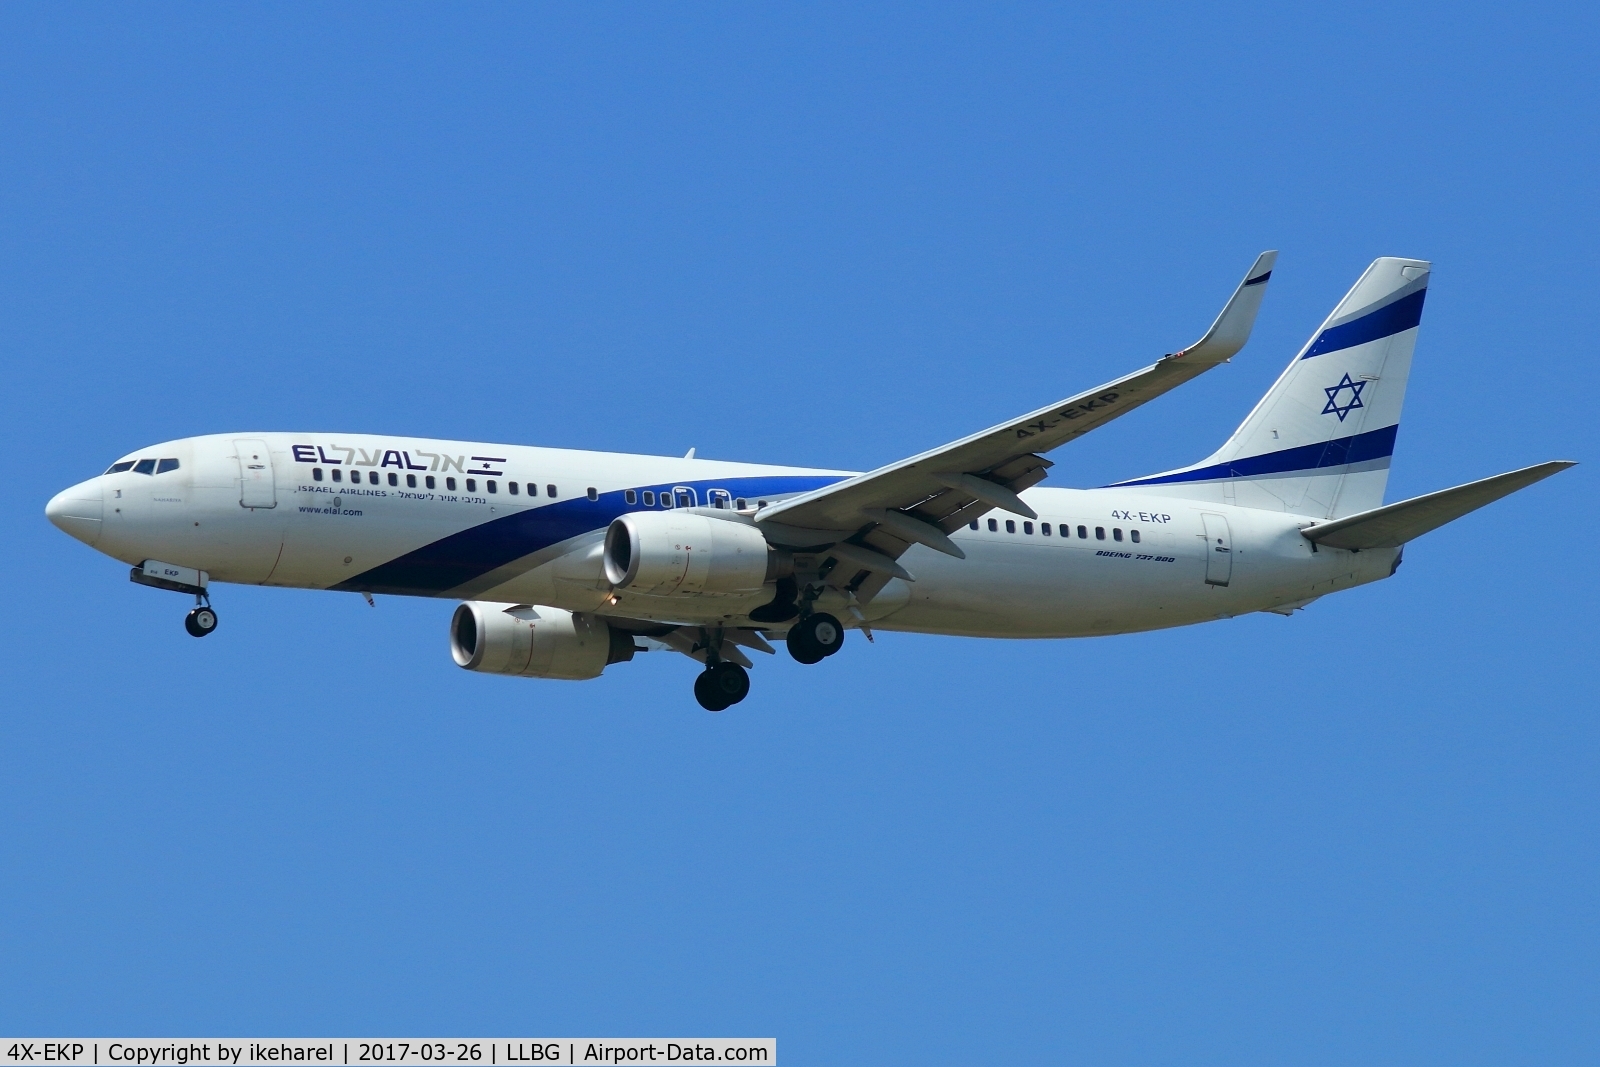 4X-EKP, 2001 Boeing 737-8Q8 C/N 30639, Flight from Sofia, Bulgaria, upon landing on runway 21.